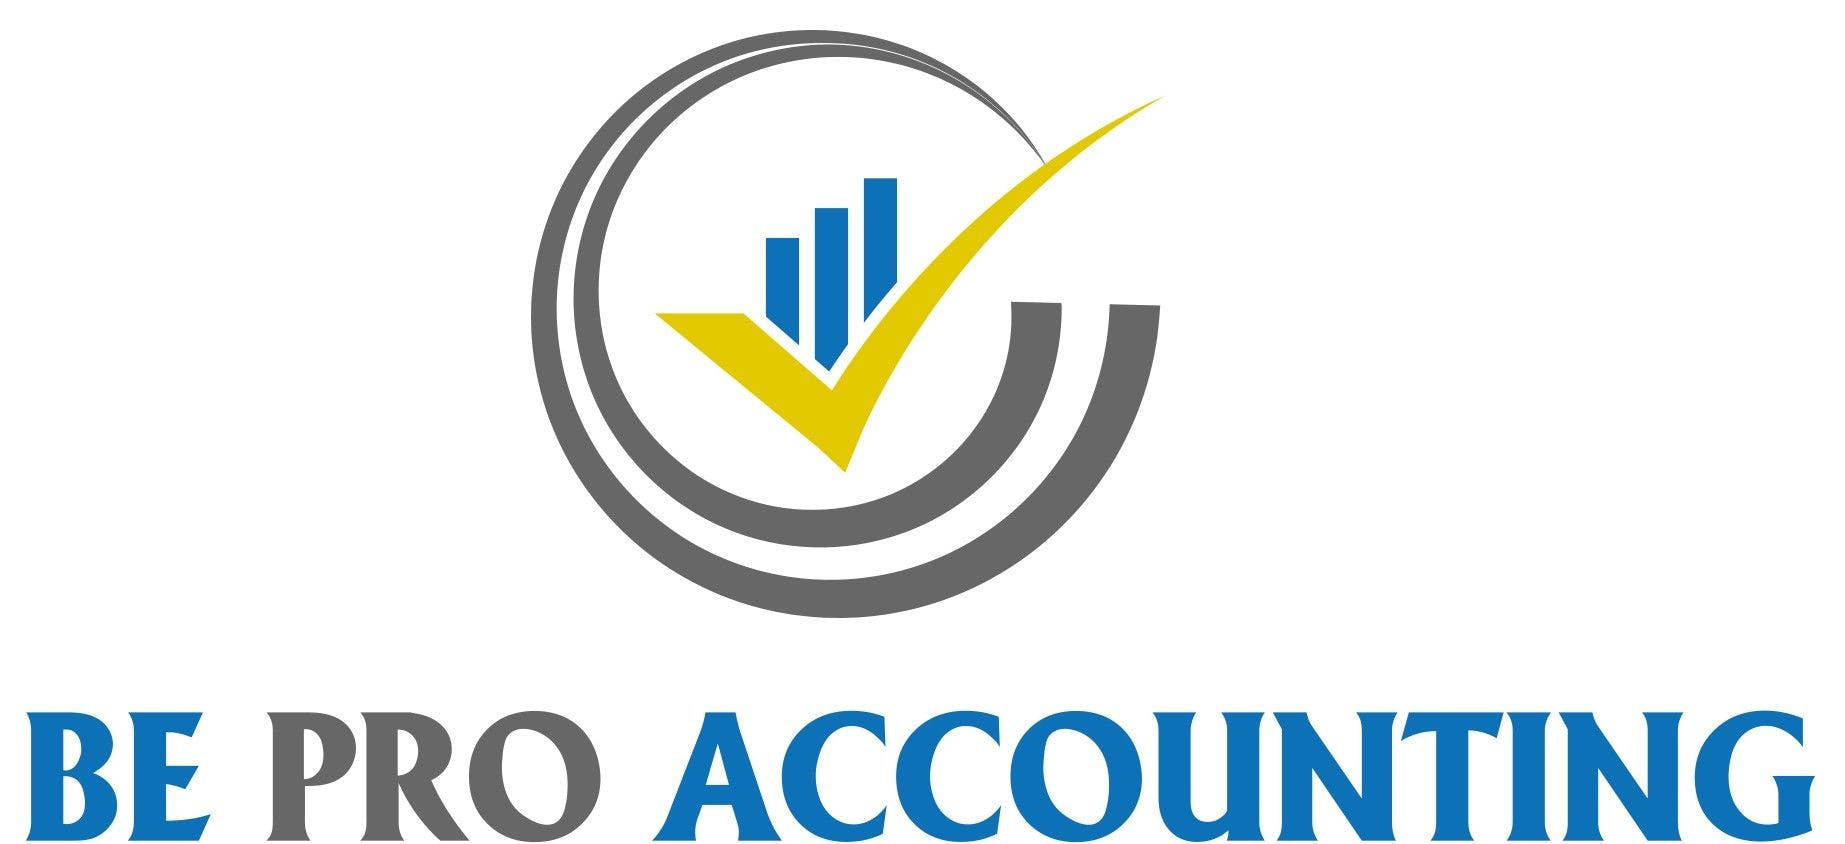 Be Pro Accounting LLC logo